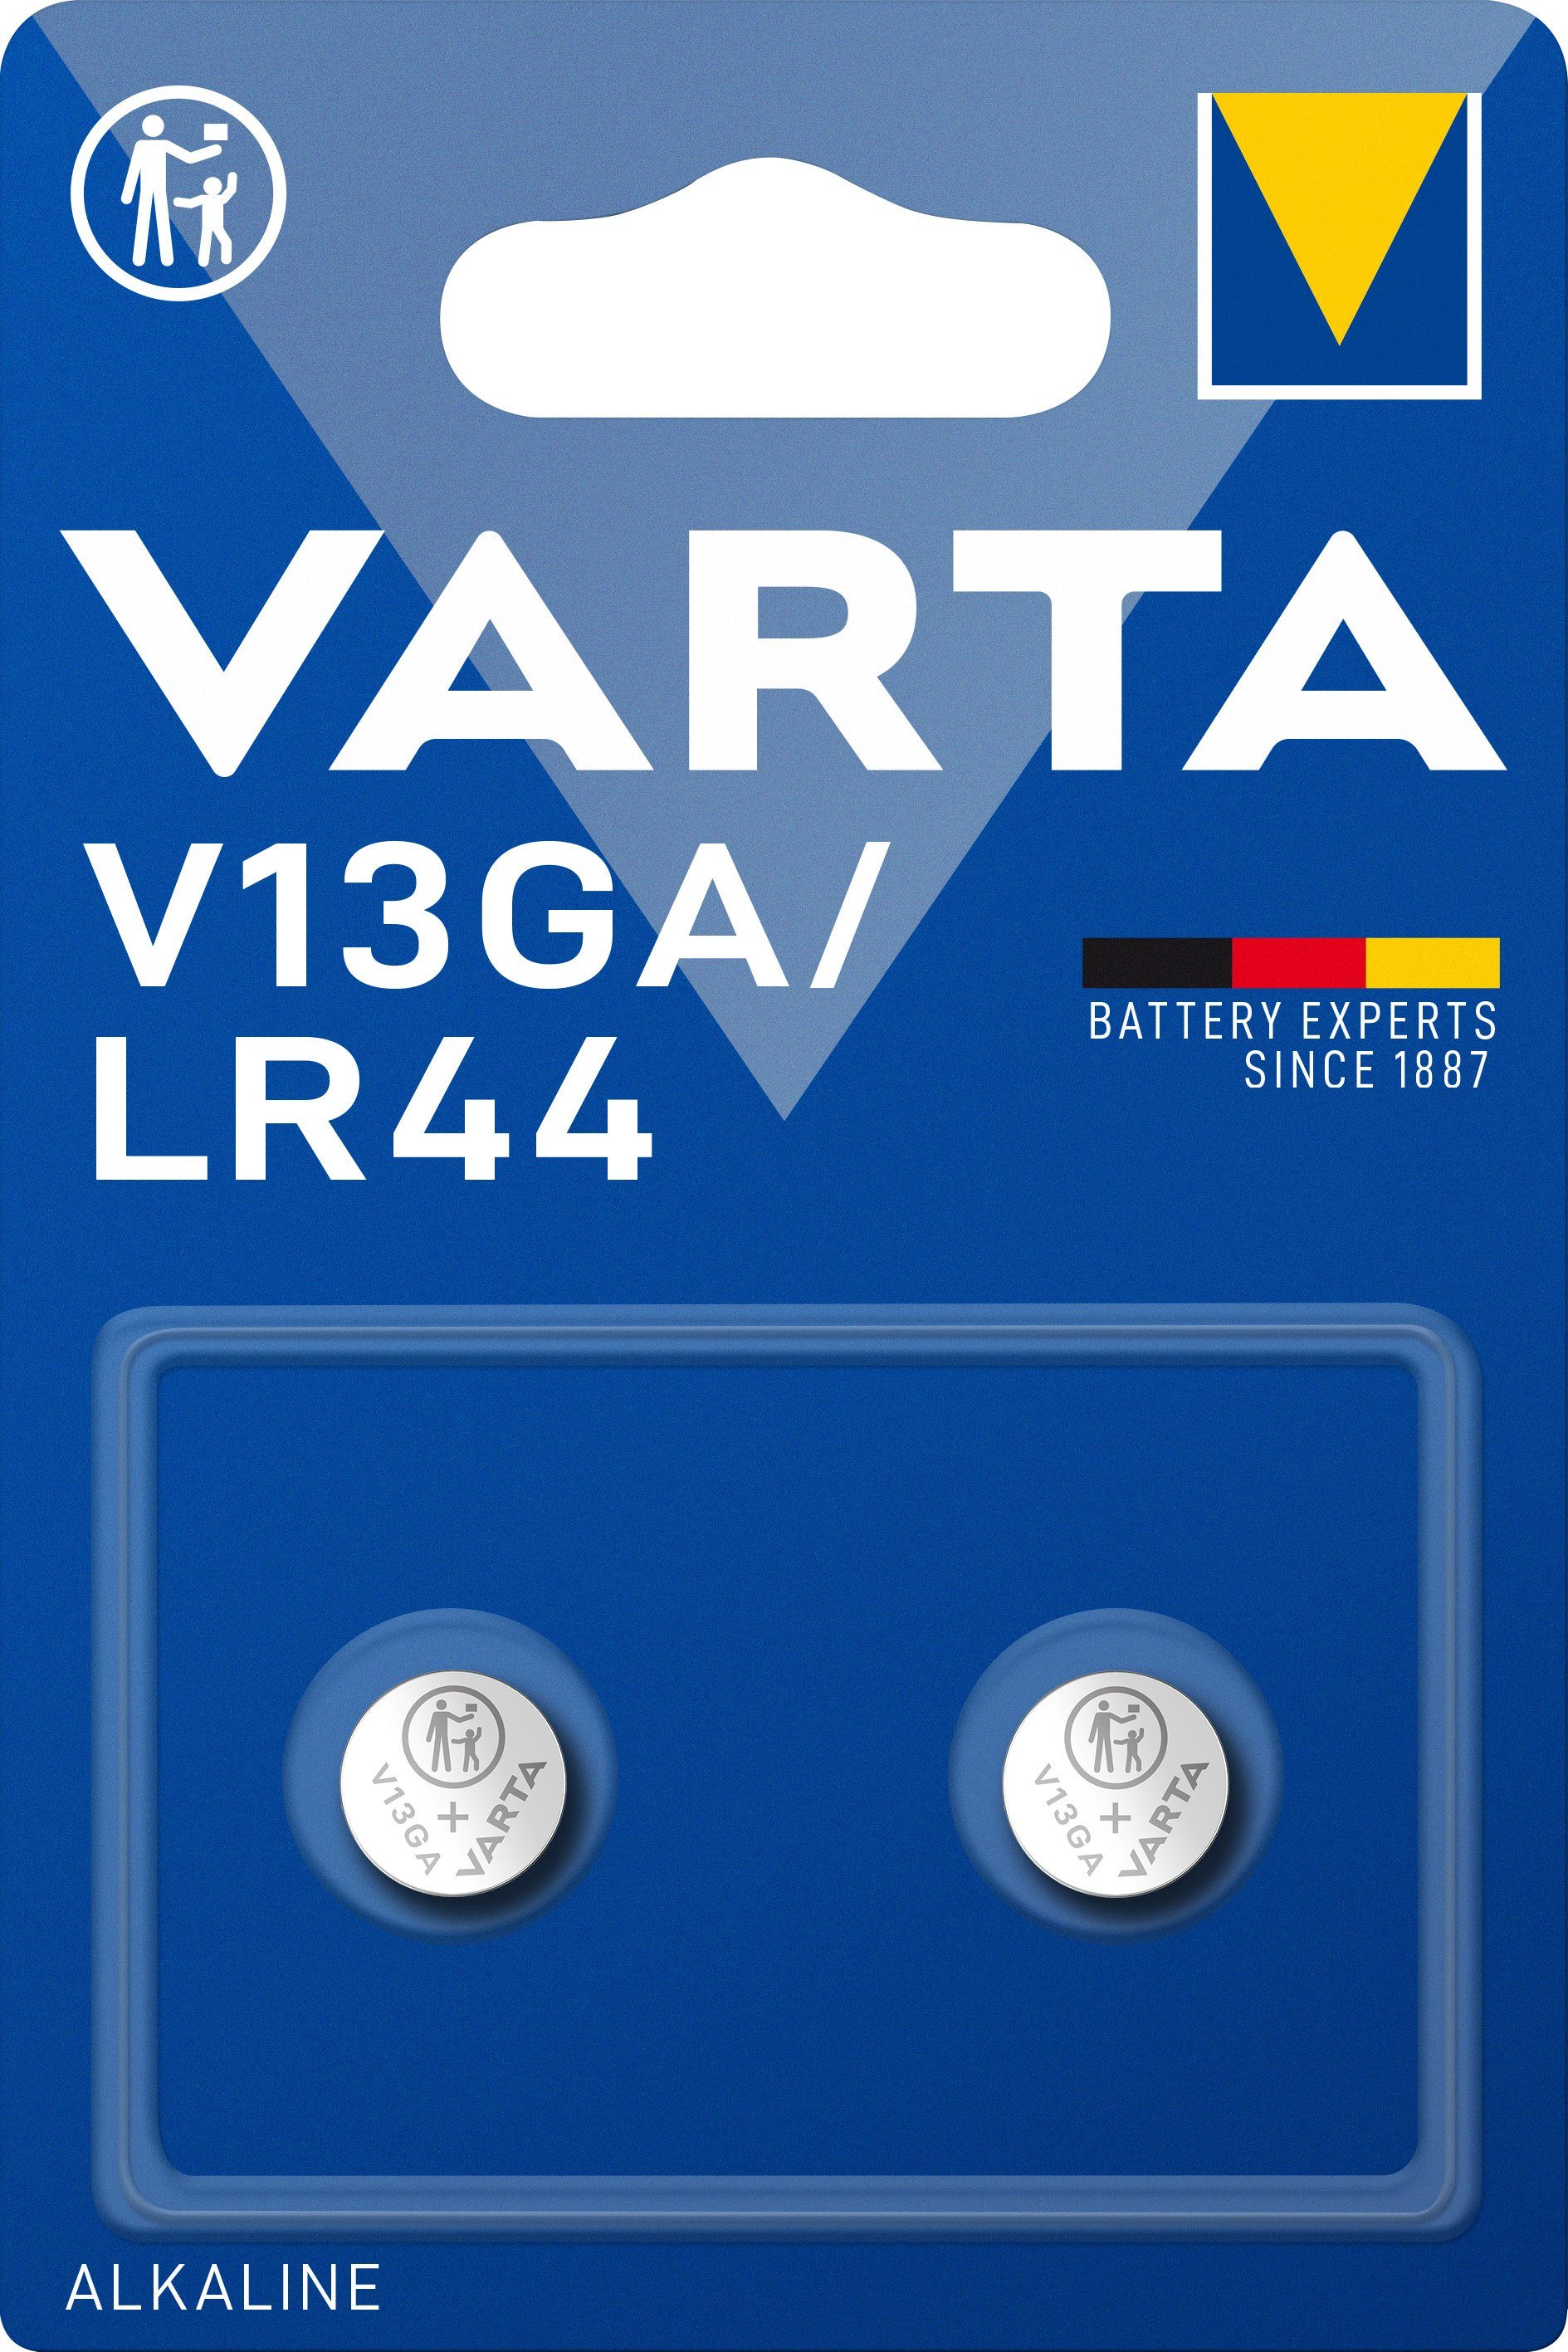 VARTA Varta Batterie Alkaline, Knopfzelle, LR44, V13GA, 1.5V Electronics, R Knopfzelle